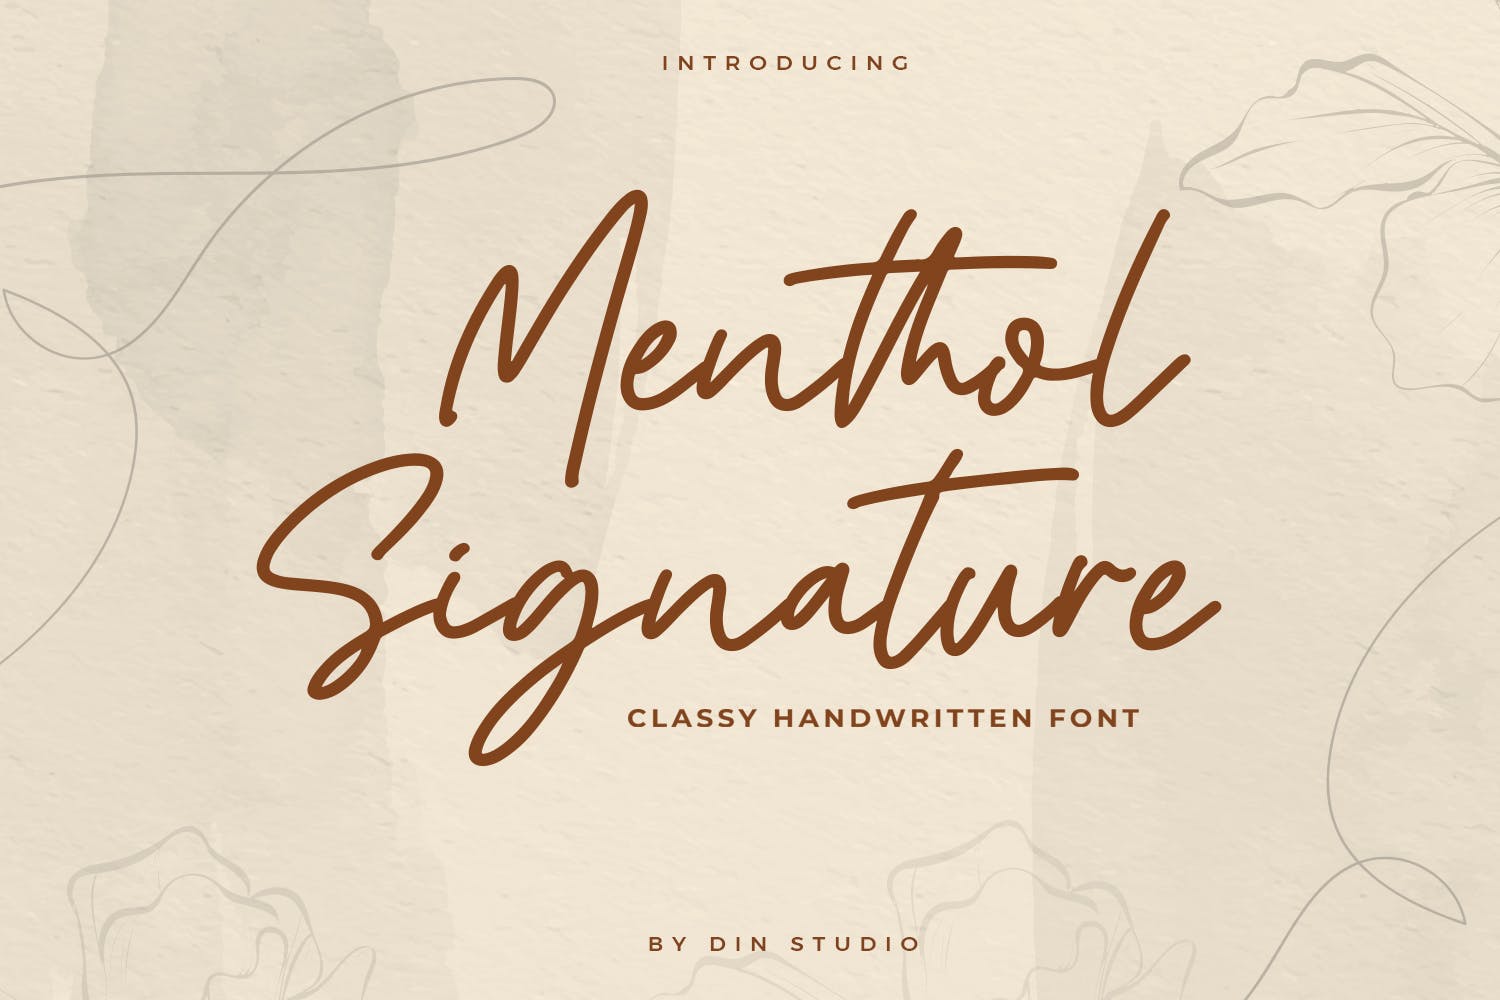 知性风英文单线签名字体 Mentol Signature – Monoline Font设计素材模板